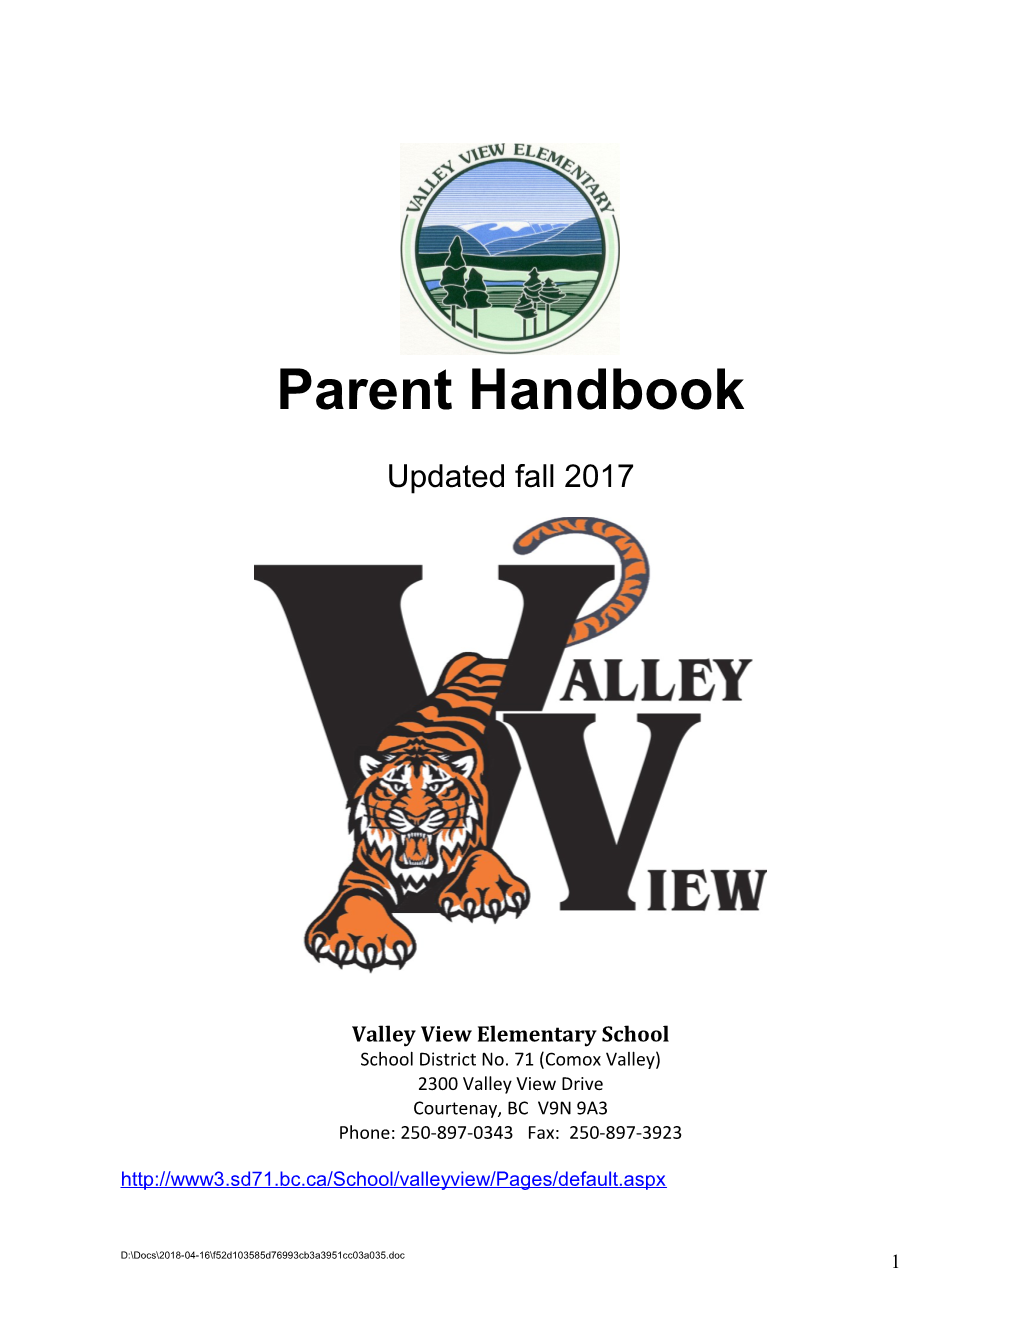 Valley View Elementary School s1